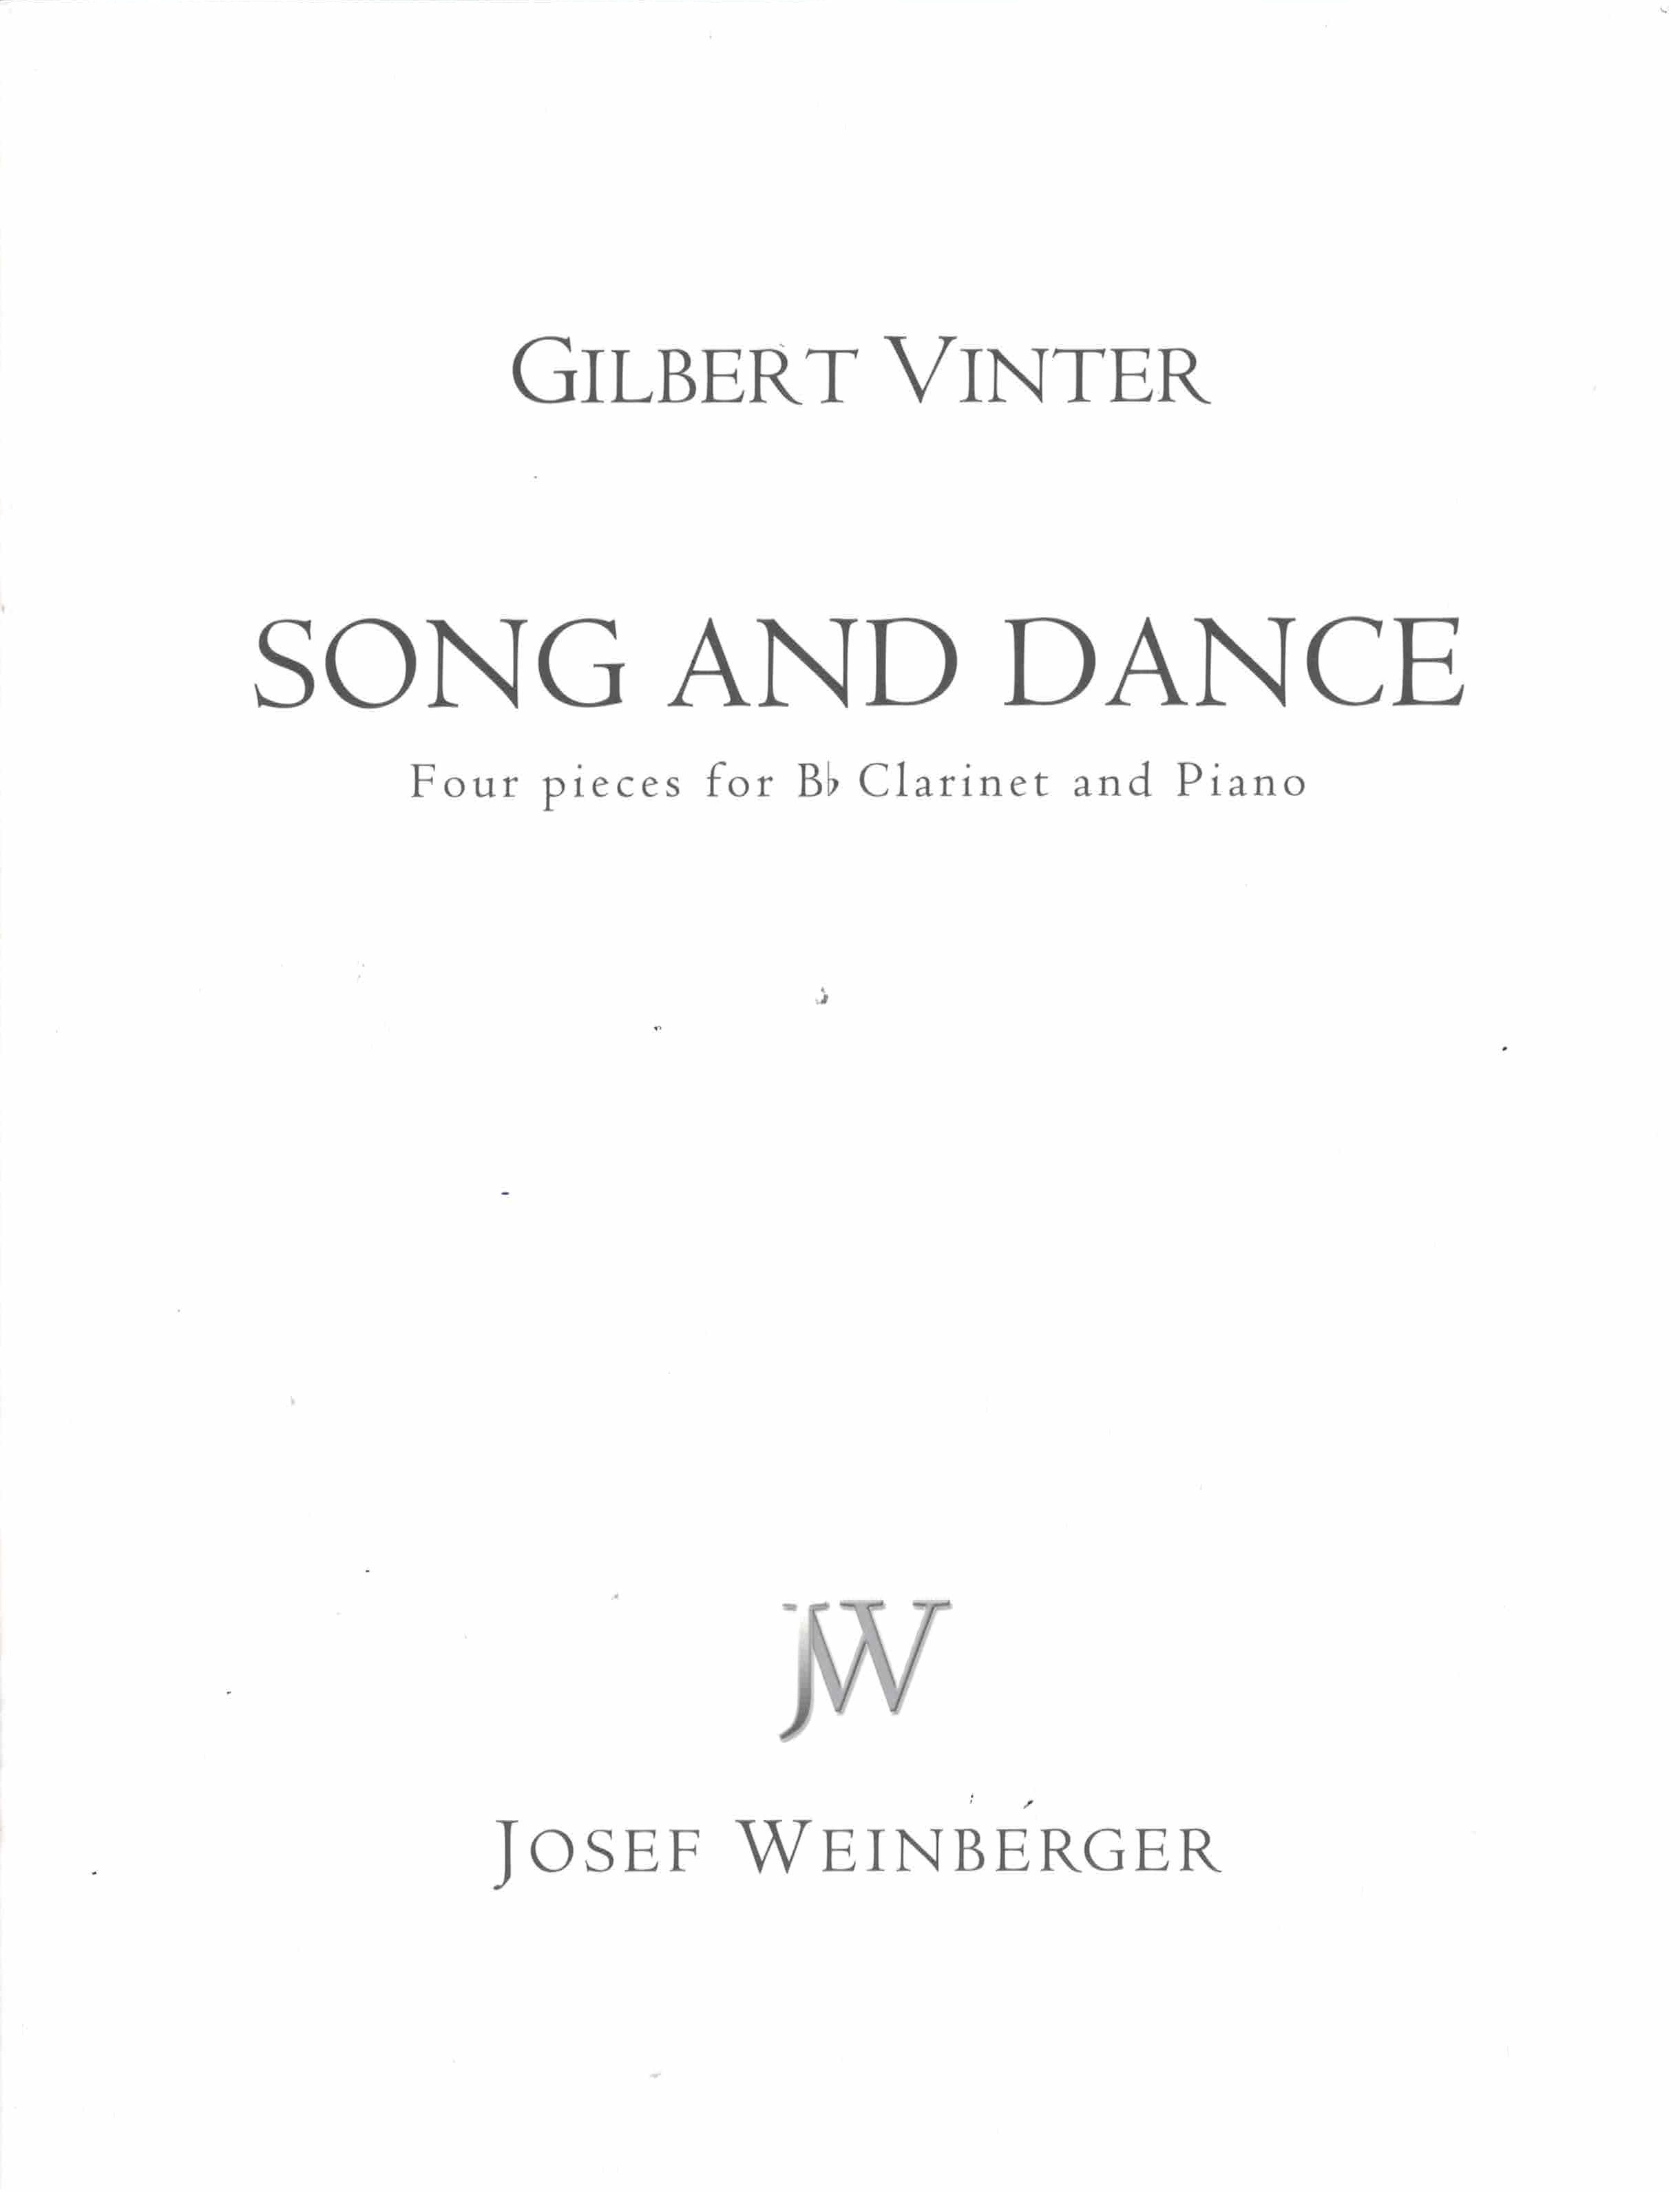 Song and Dance, G. Vinter, Klar Klav